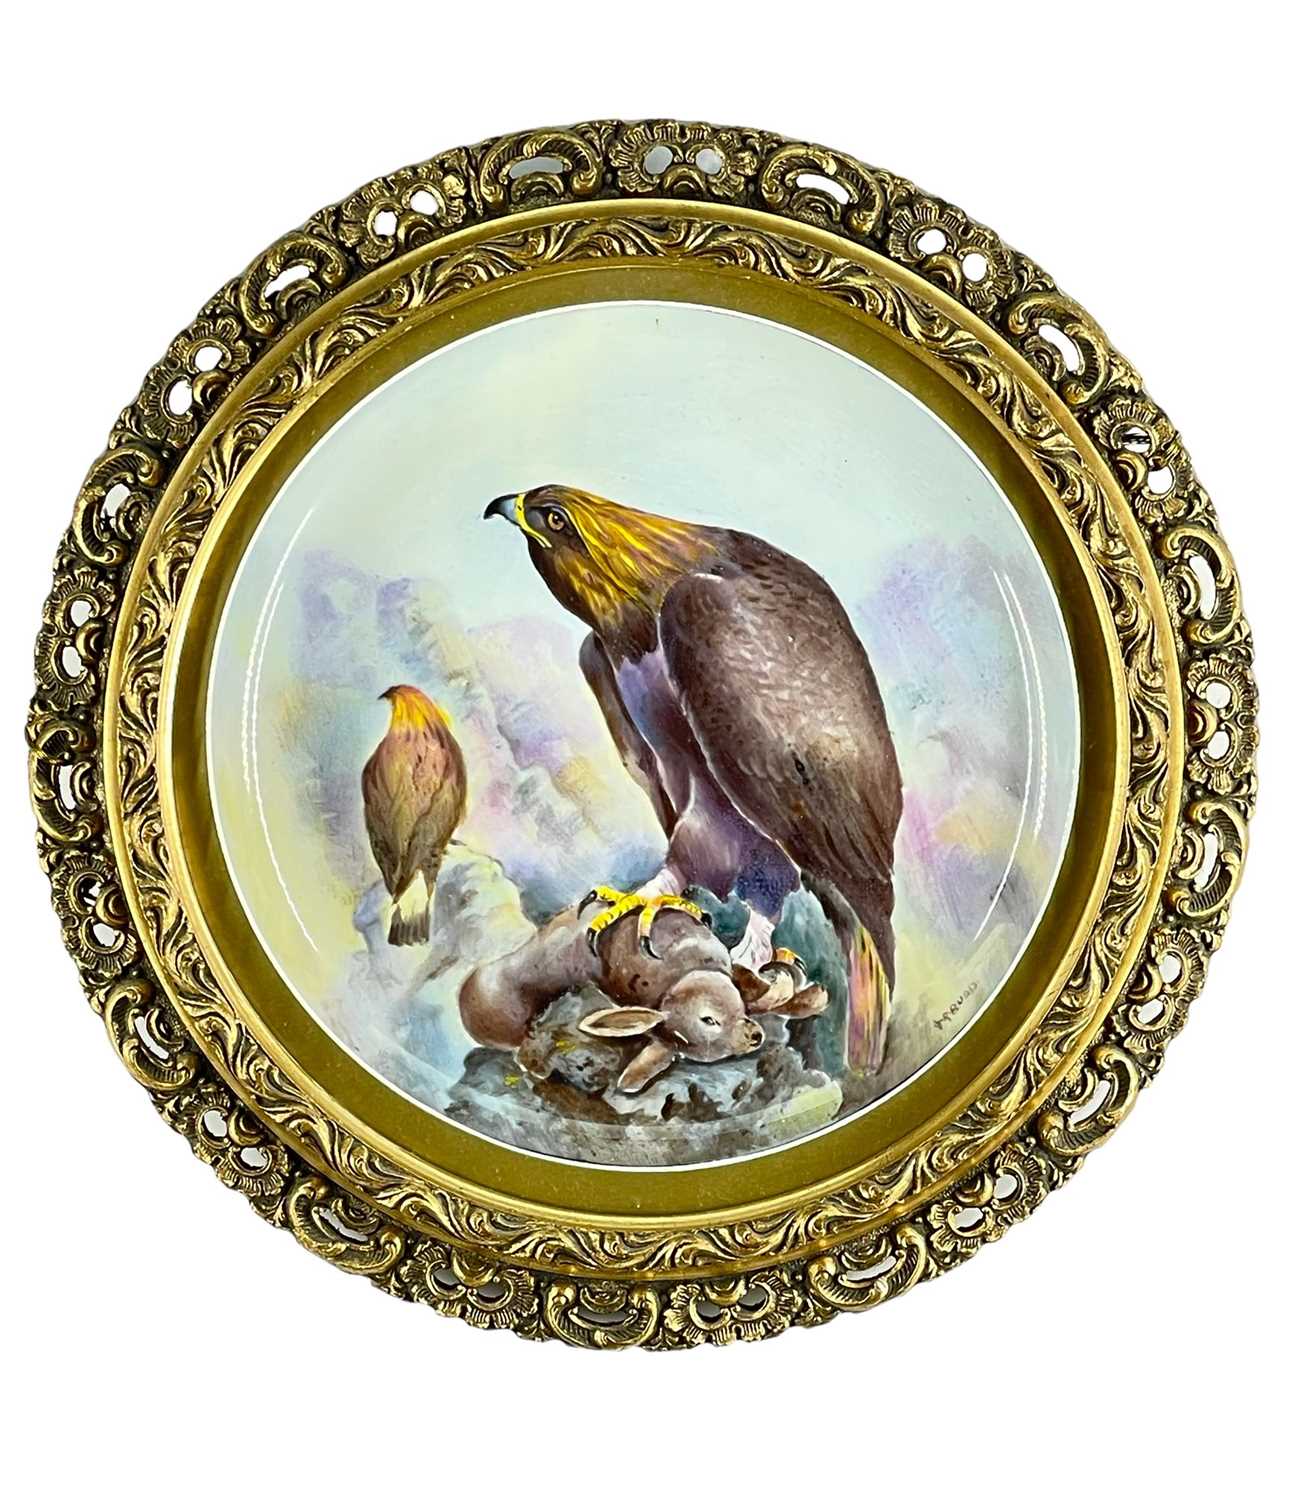 HAND PAINTED PORCELAIN DISH, probably Coalport, depicting a golden eagle with rabbit prey, signed J.